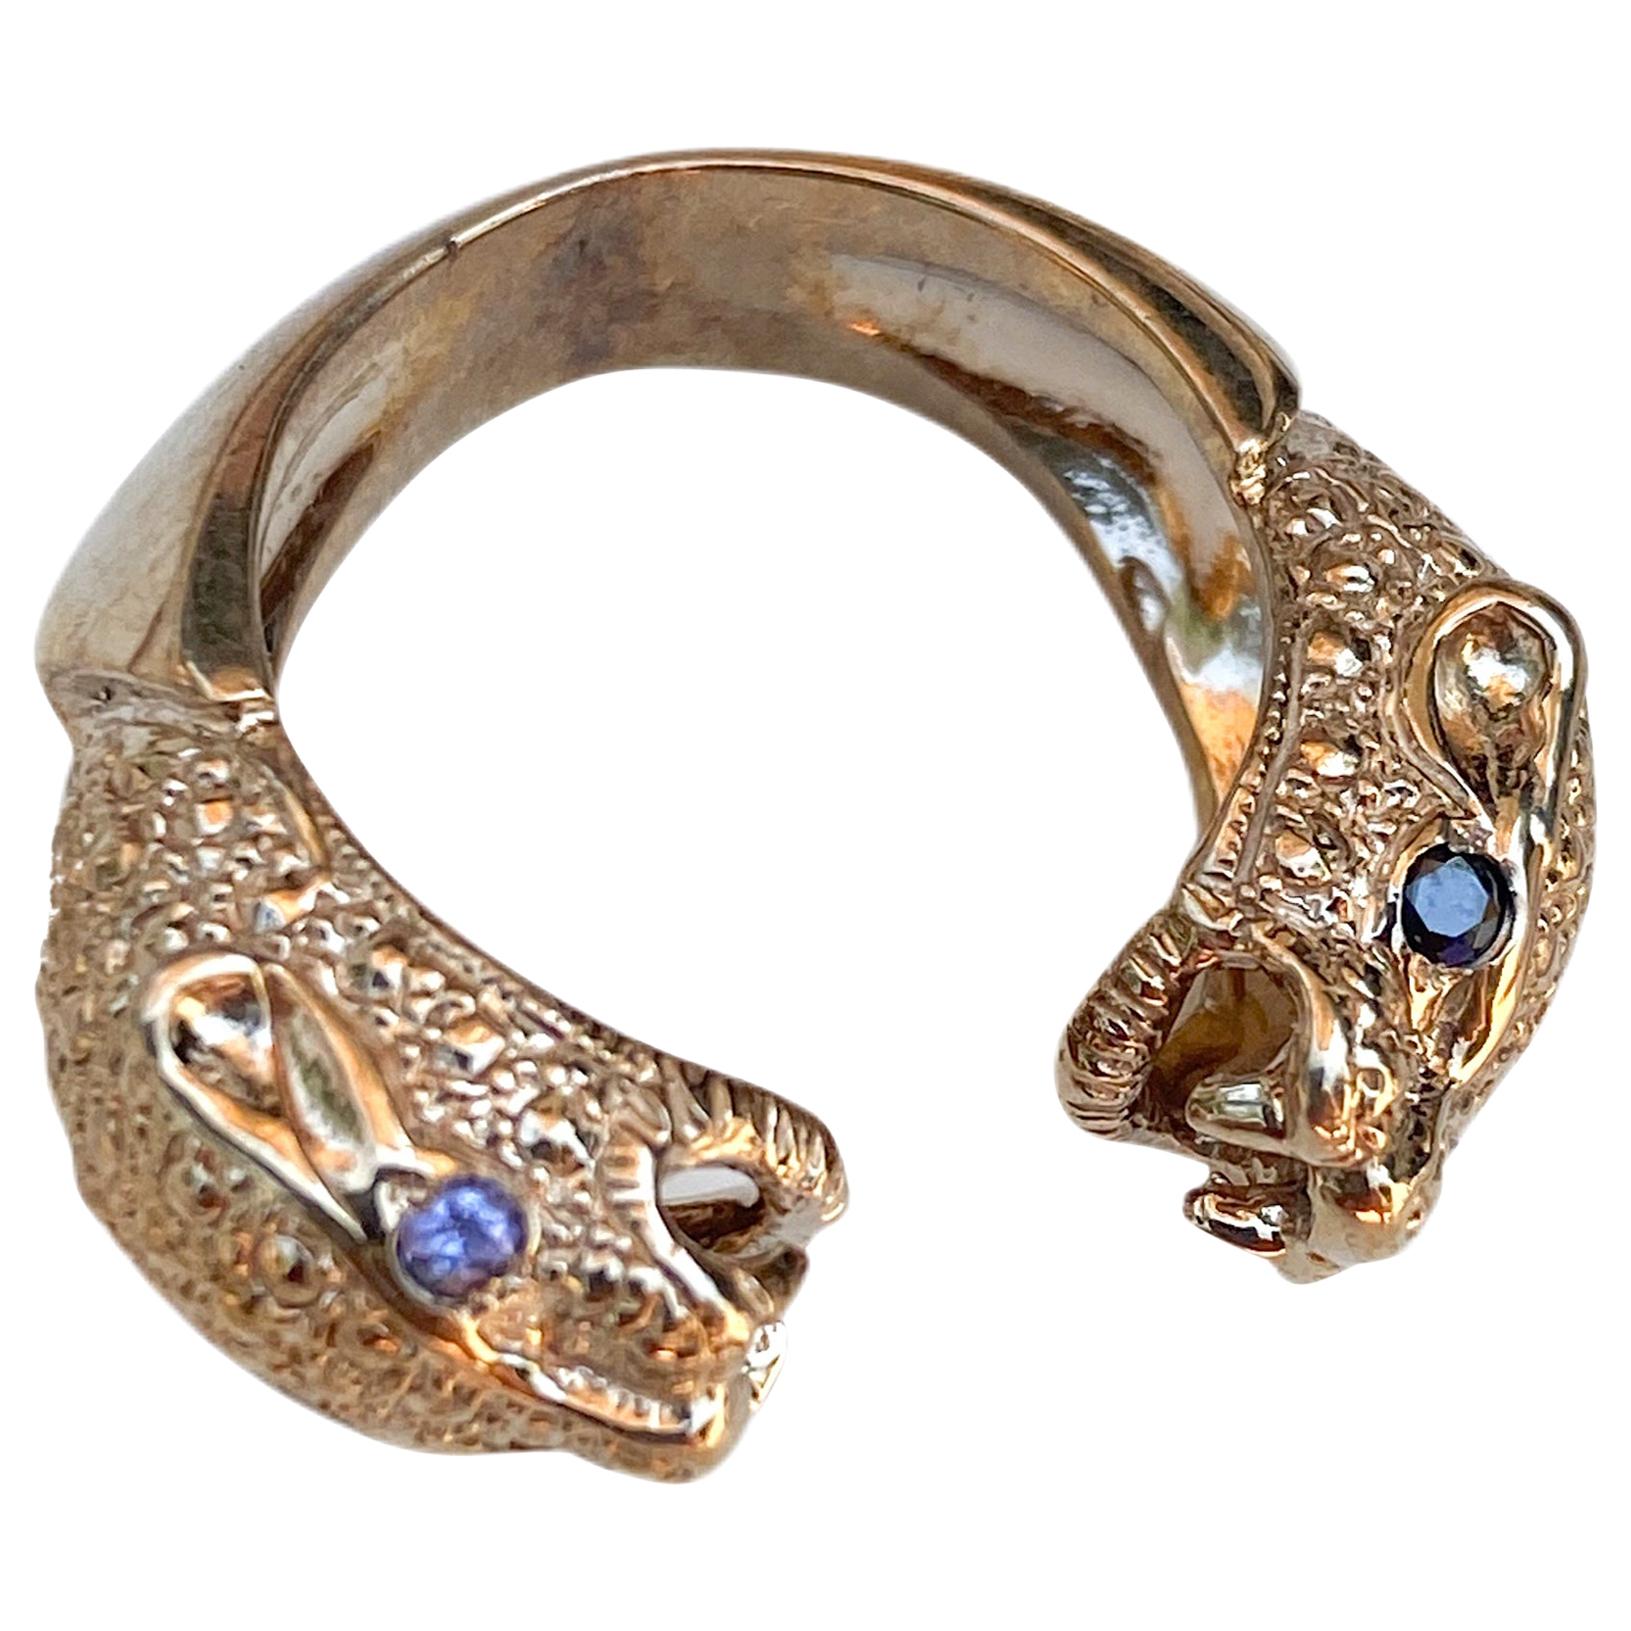 2 pcs Black Diamond 1 pc Tanazanite 1 pc Opal Jaguar Ring Bronze Animal Resizable J Dauphin
J DAUPHIN Ring 